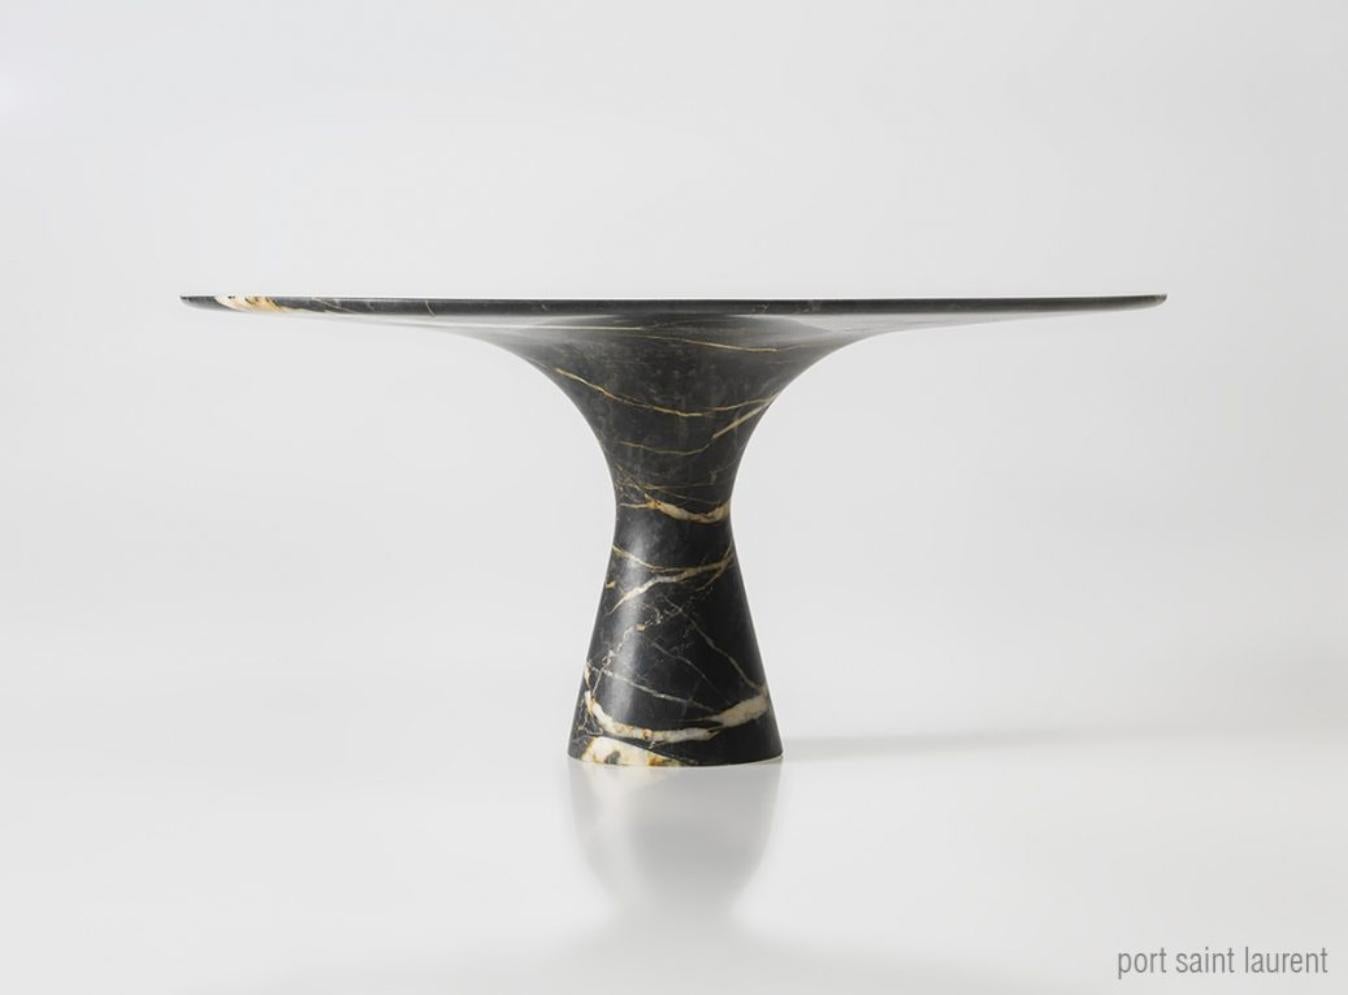 Port Saint Laurent Refined Contemporary Marble Low Table 160/36 For Sale 9